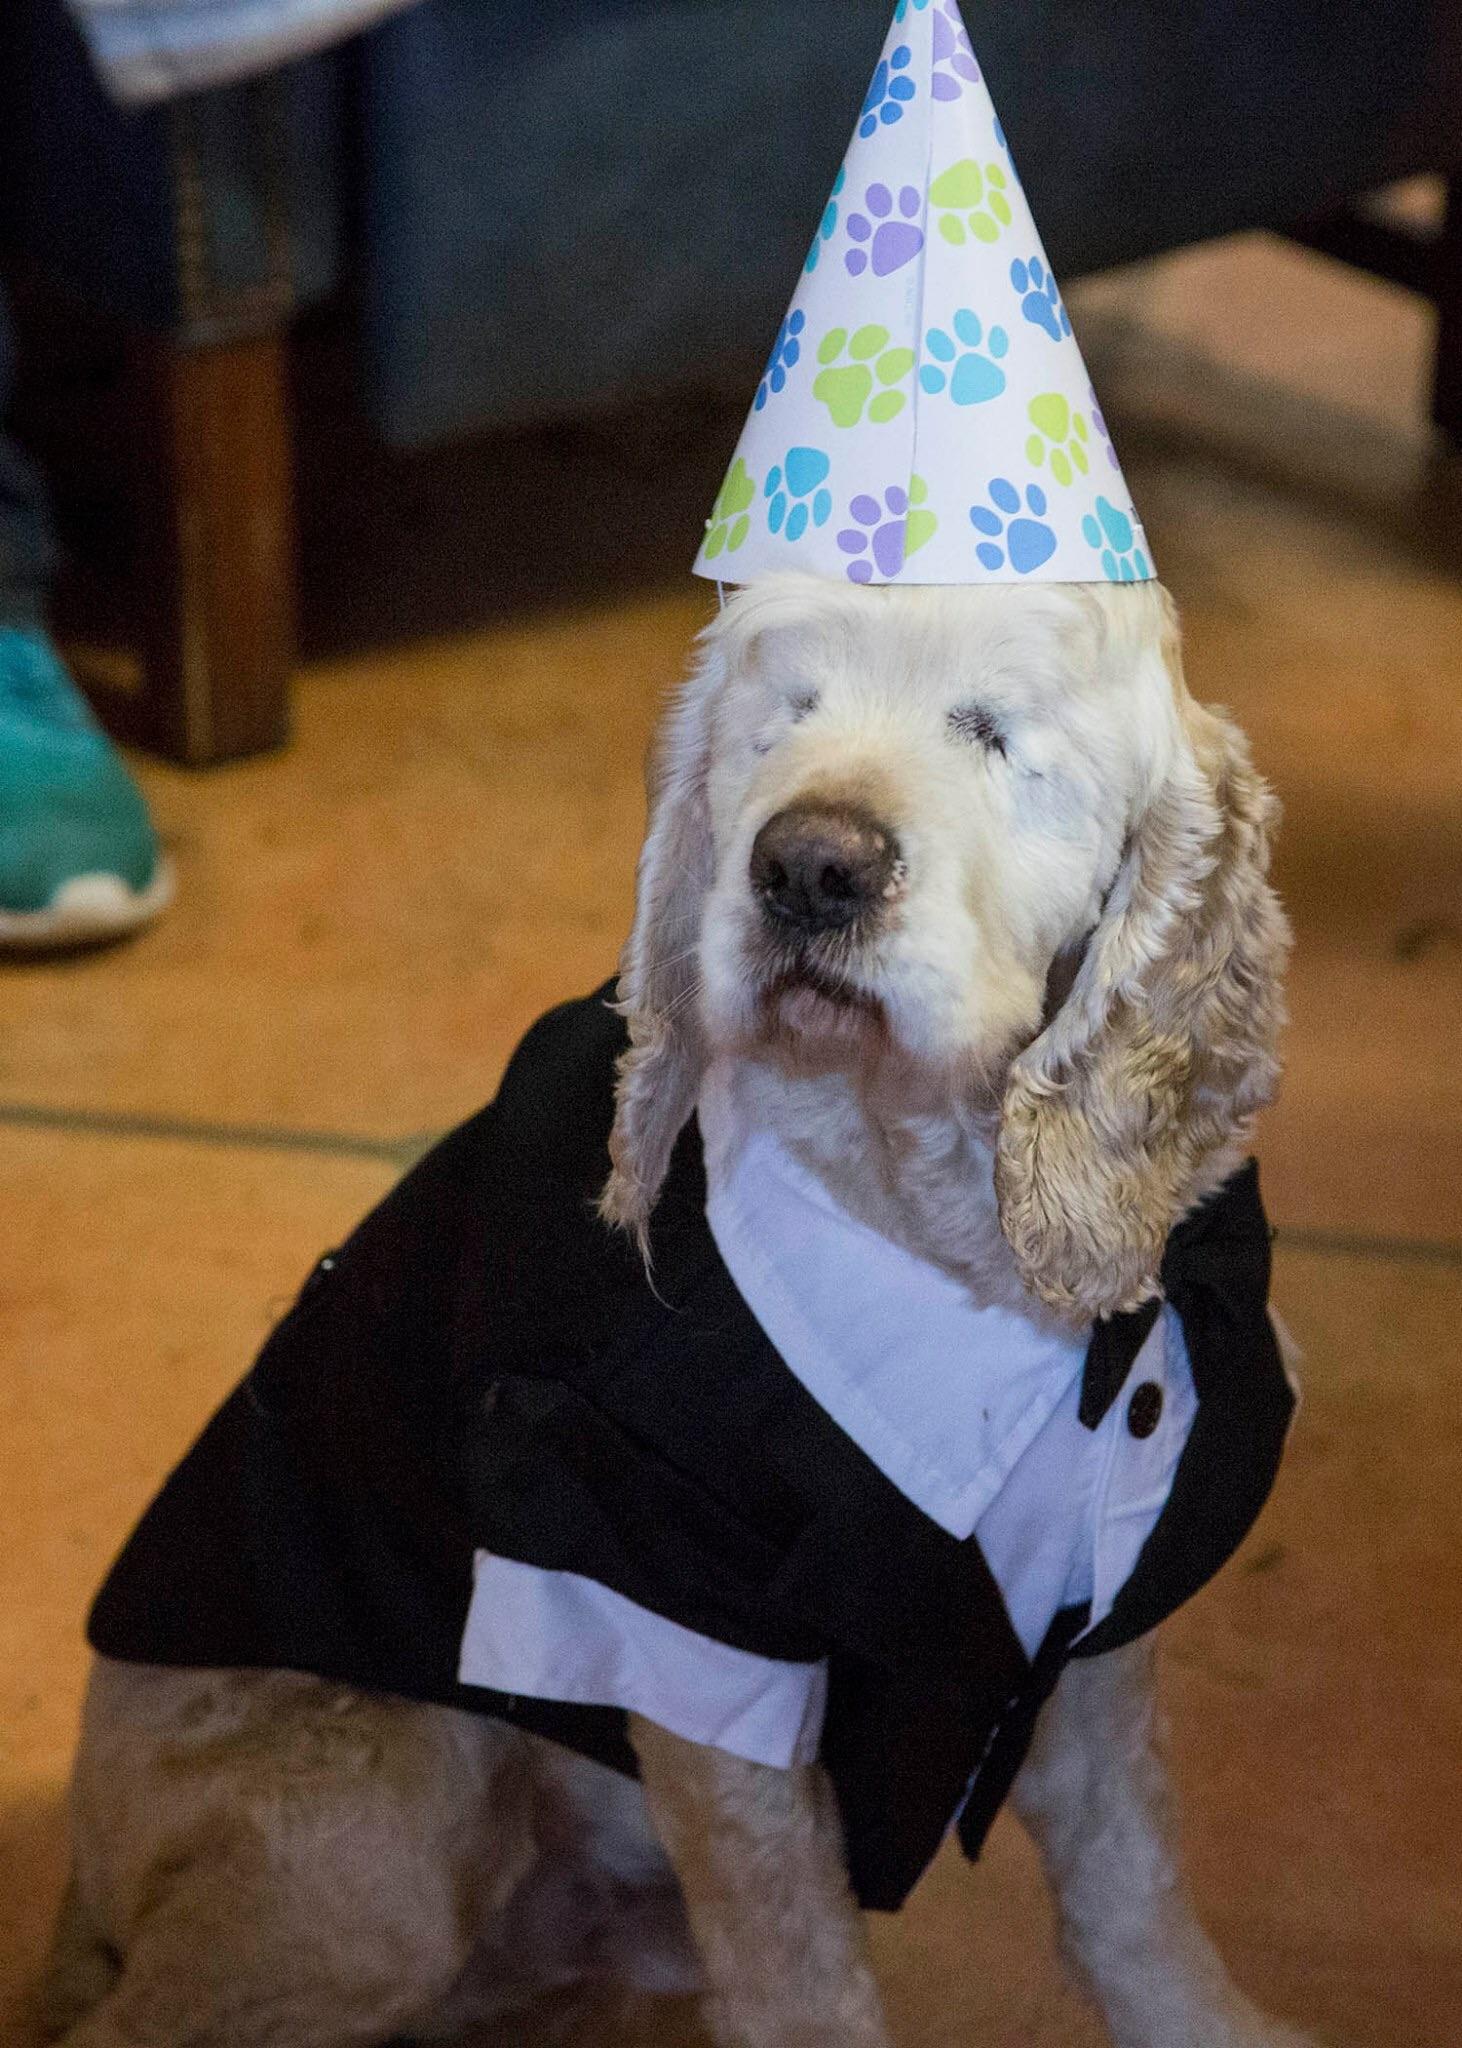 Blind senior doggo gets surprise party at shelter